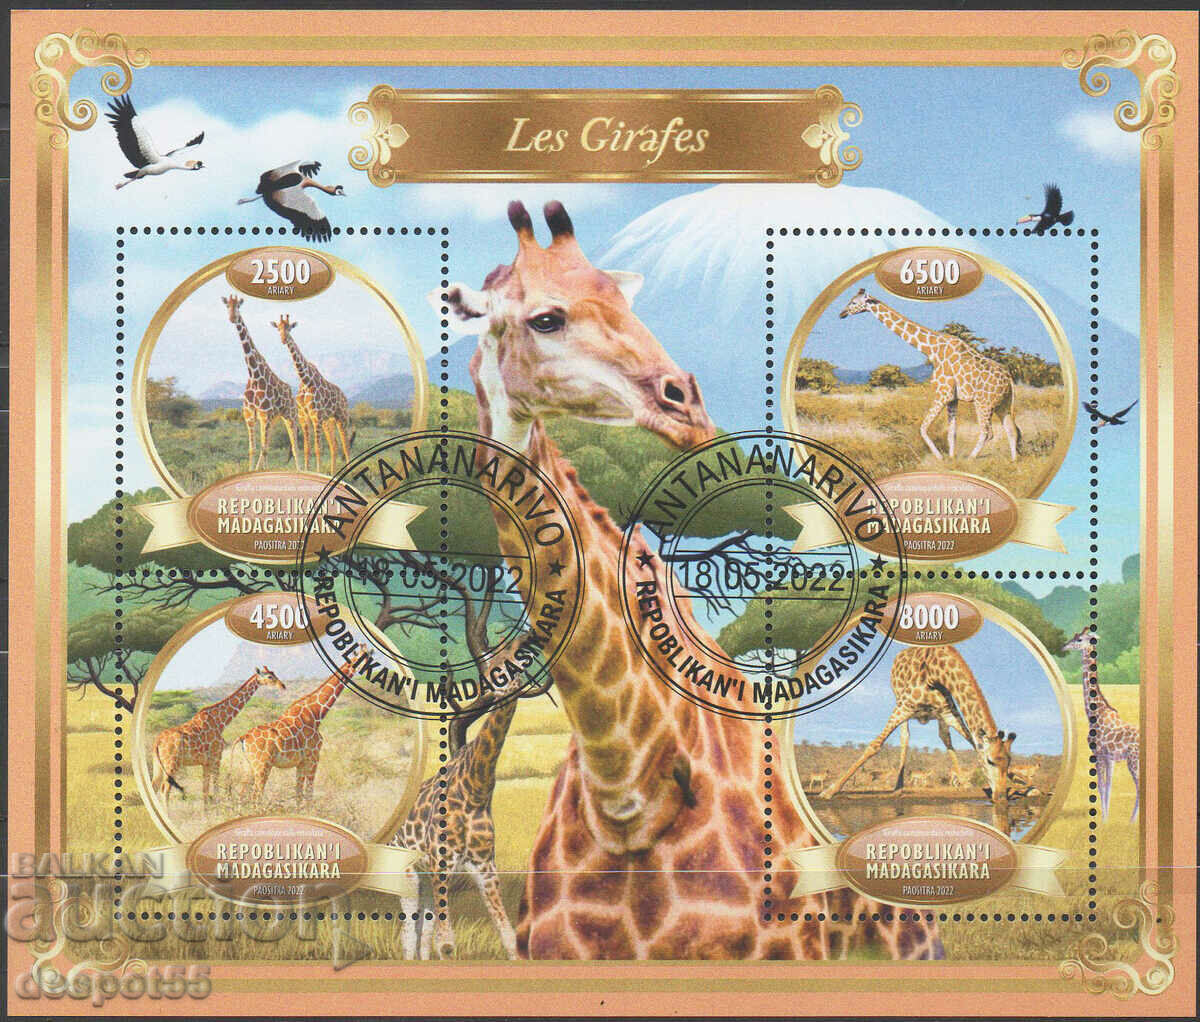 2022. Madagascar. Giraffes. Block.